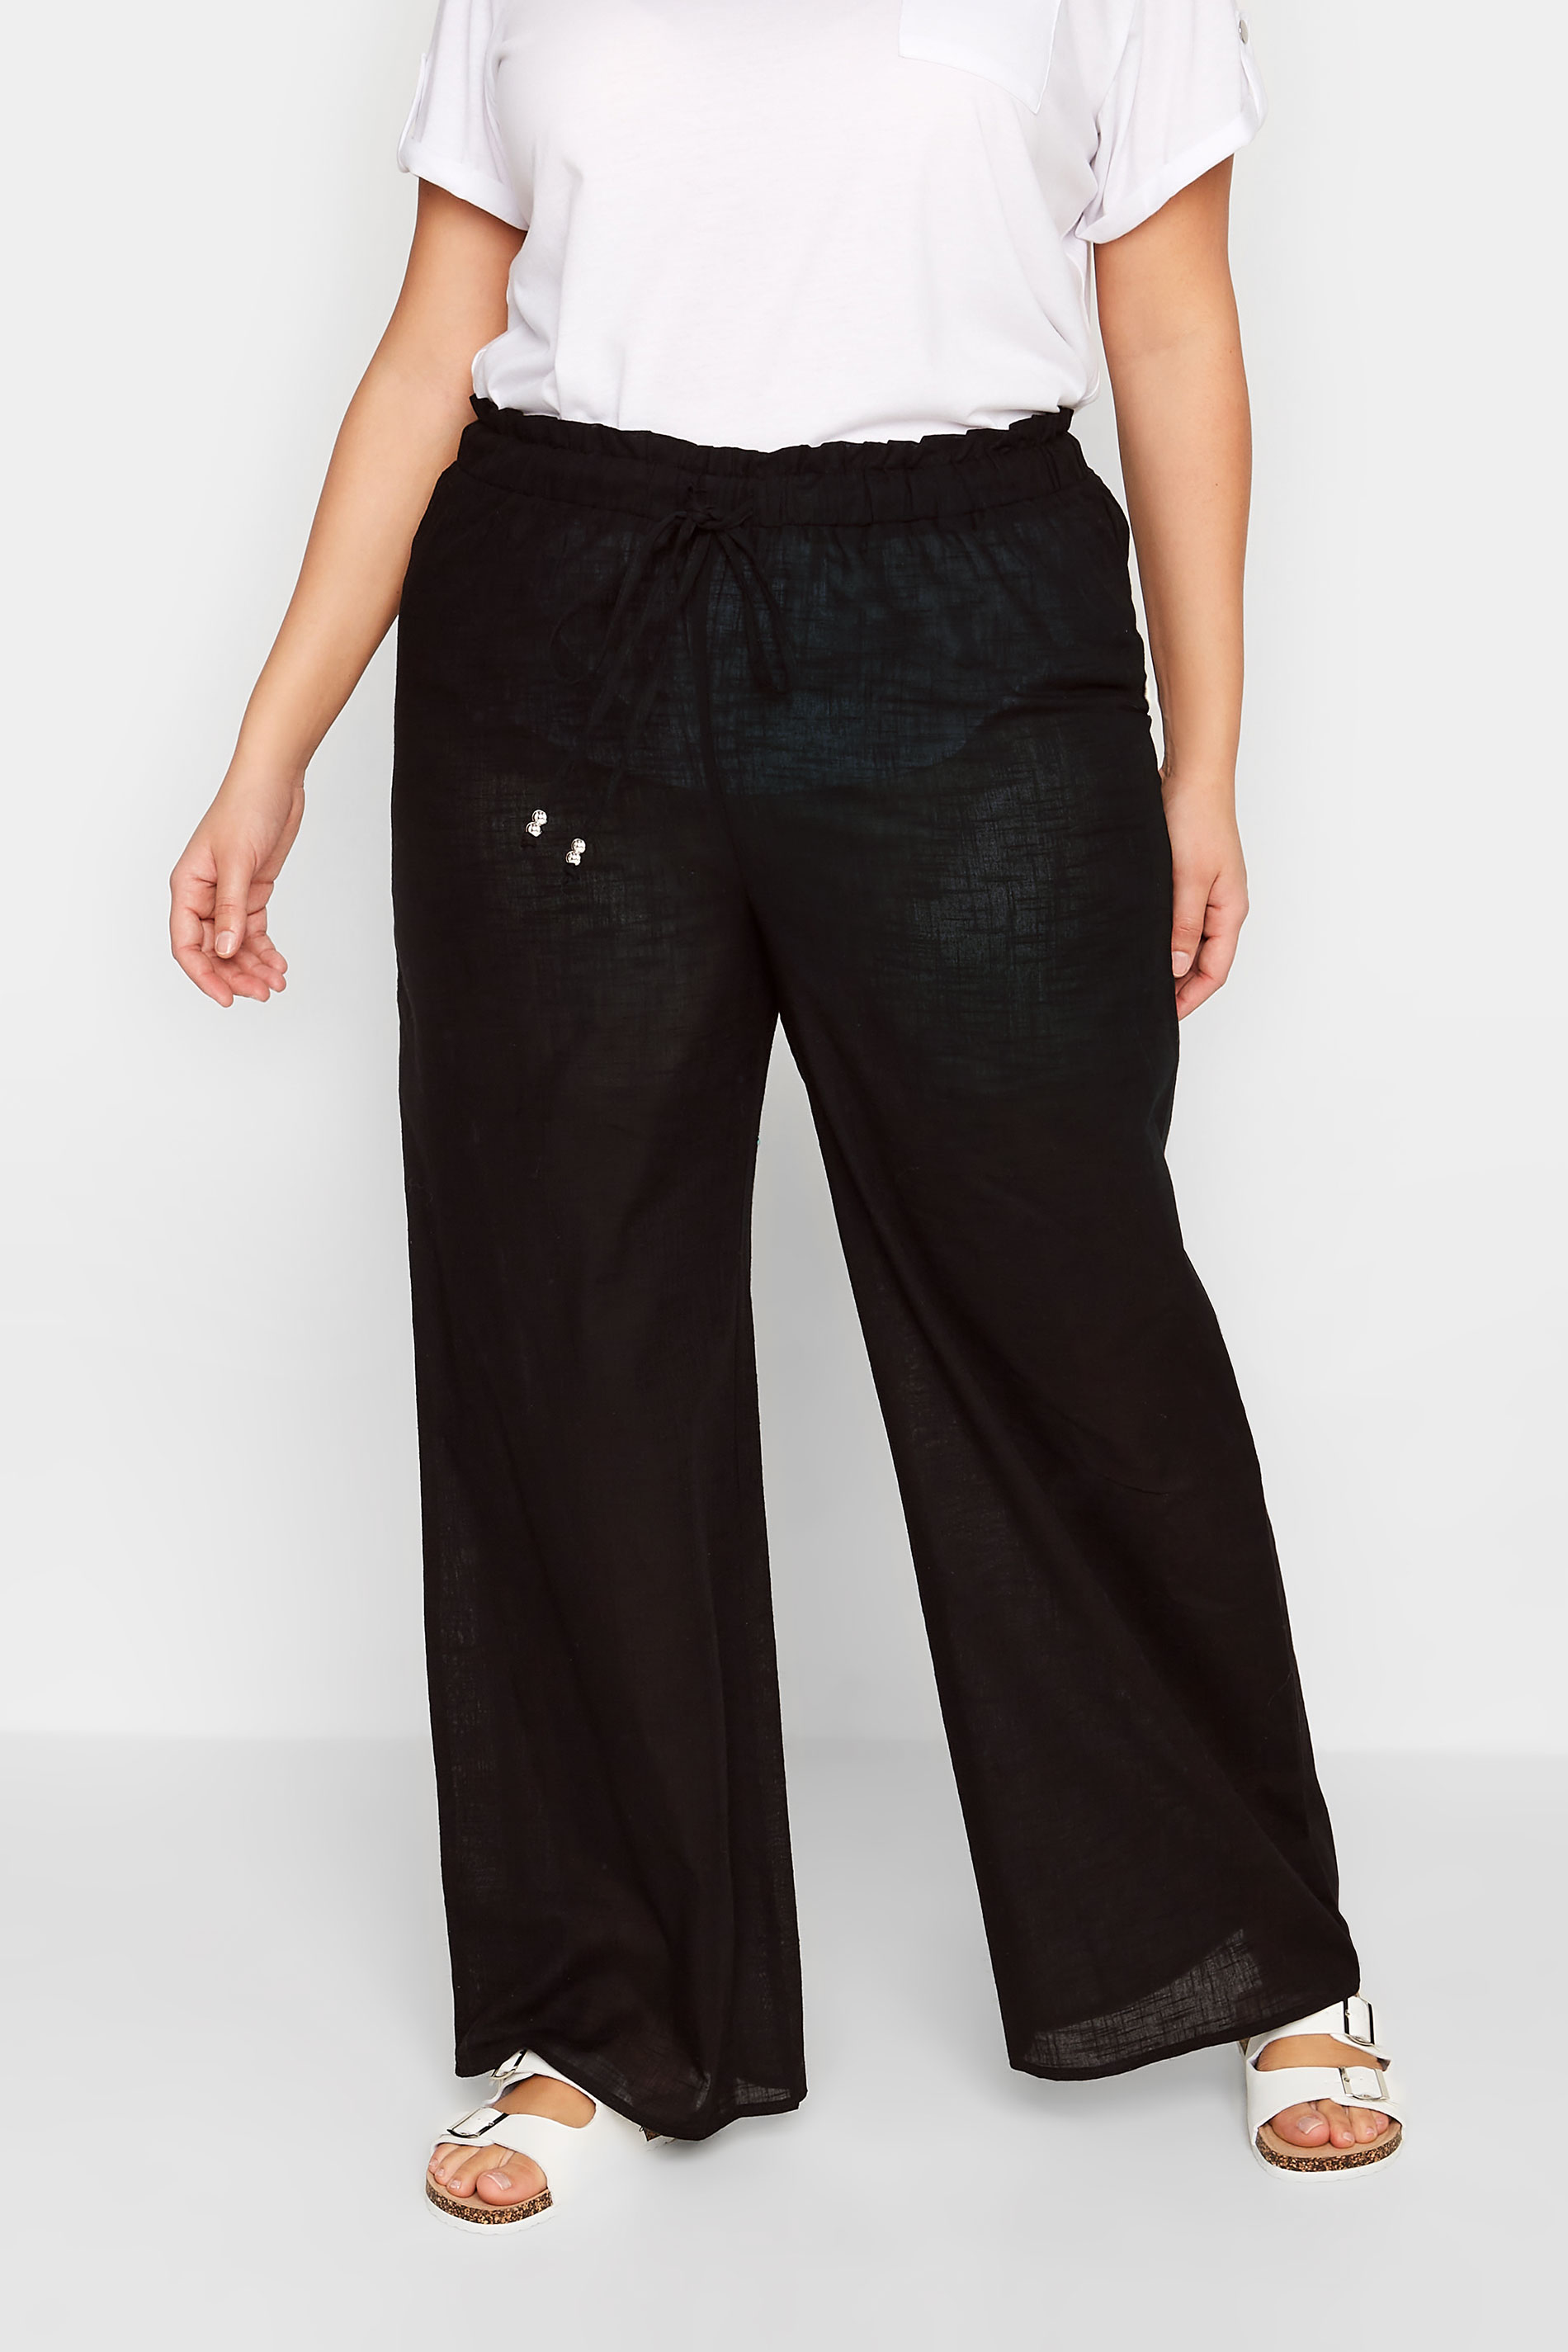 LTS Tall Black Cotton Wide Leg Beach Trousers | Long Tall Sally  1